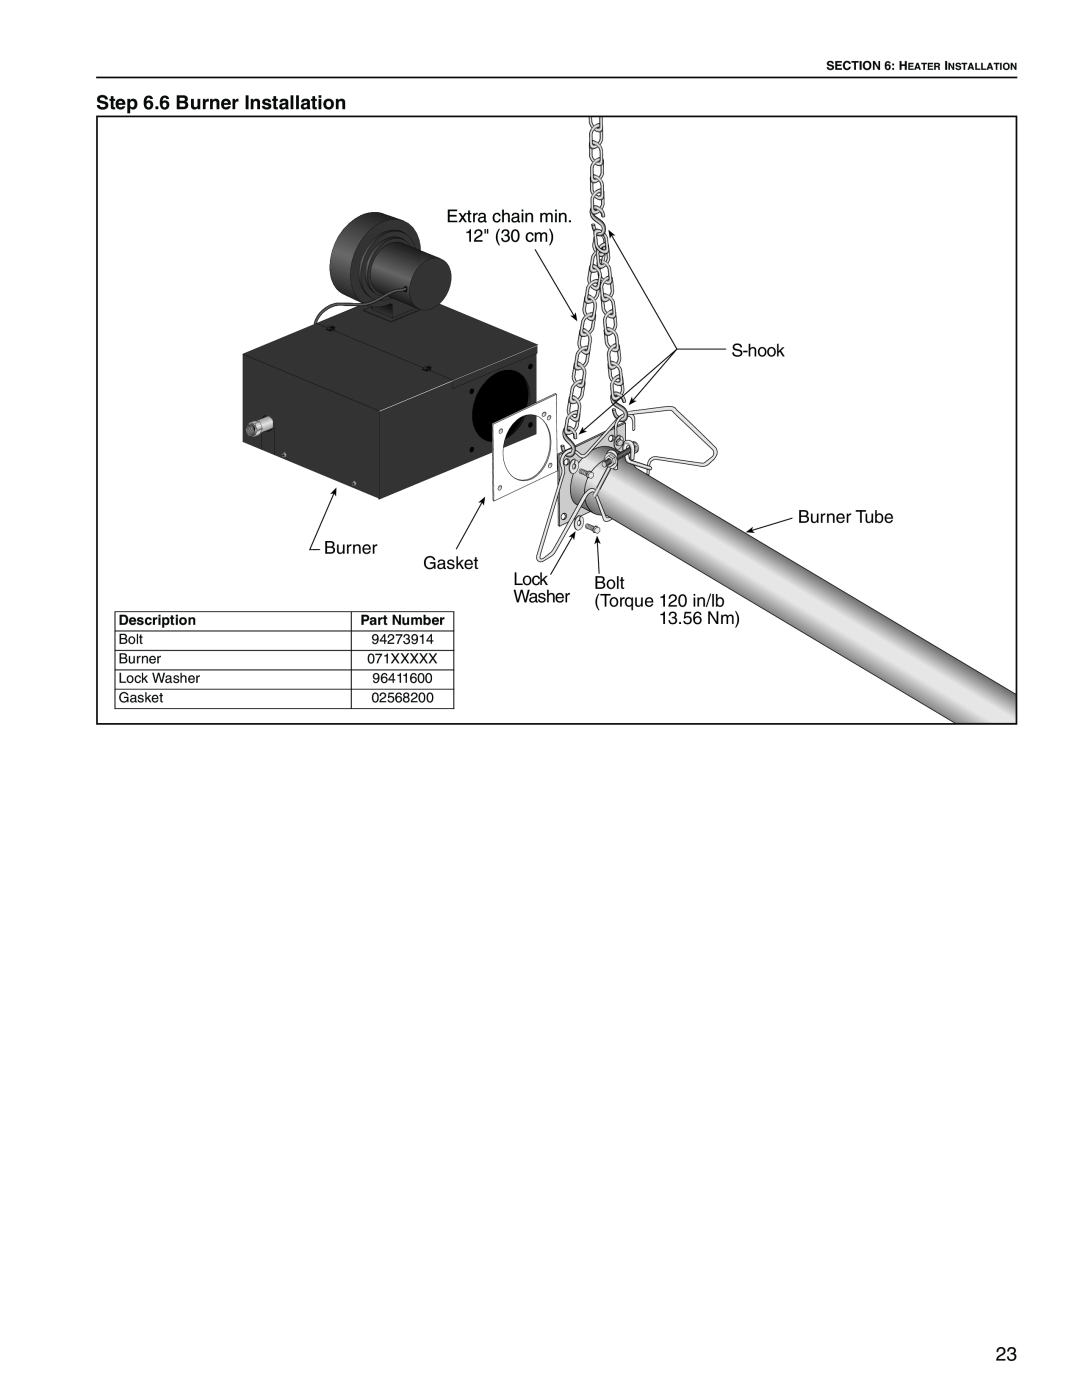 Roberts Gorden Linear Heater manual 6 Burner Installation, Extra chain min 12 30 cm, Gasket, Lock, Description, Part Number 